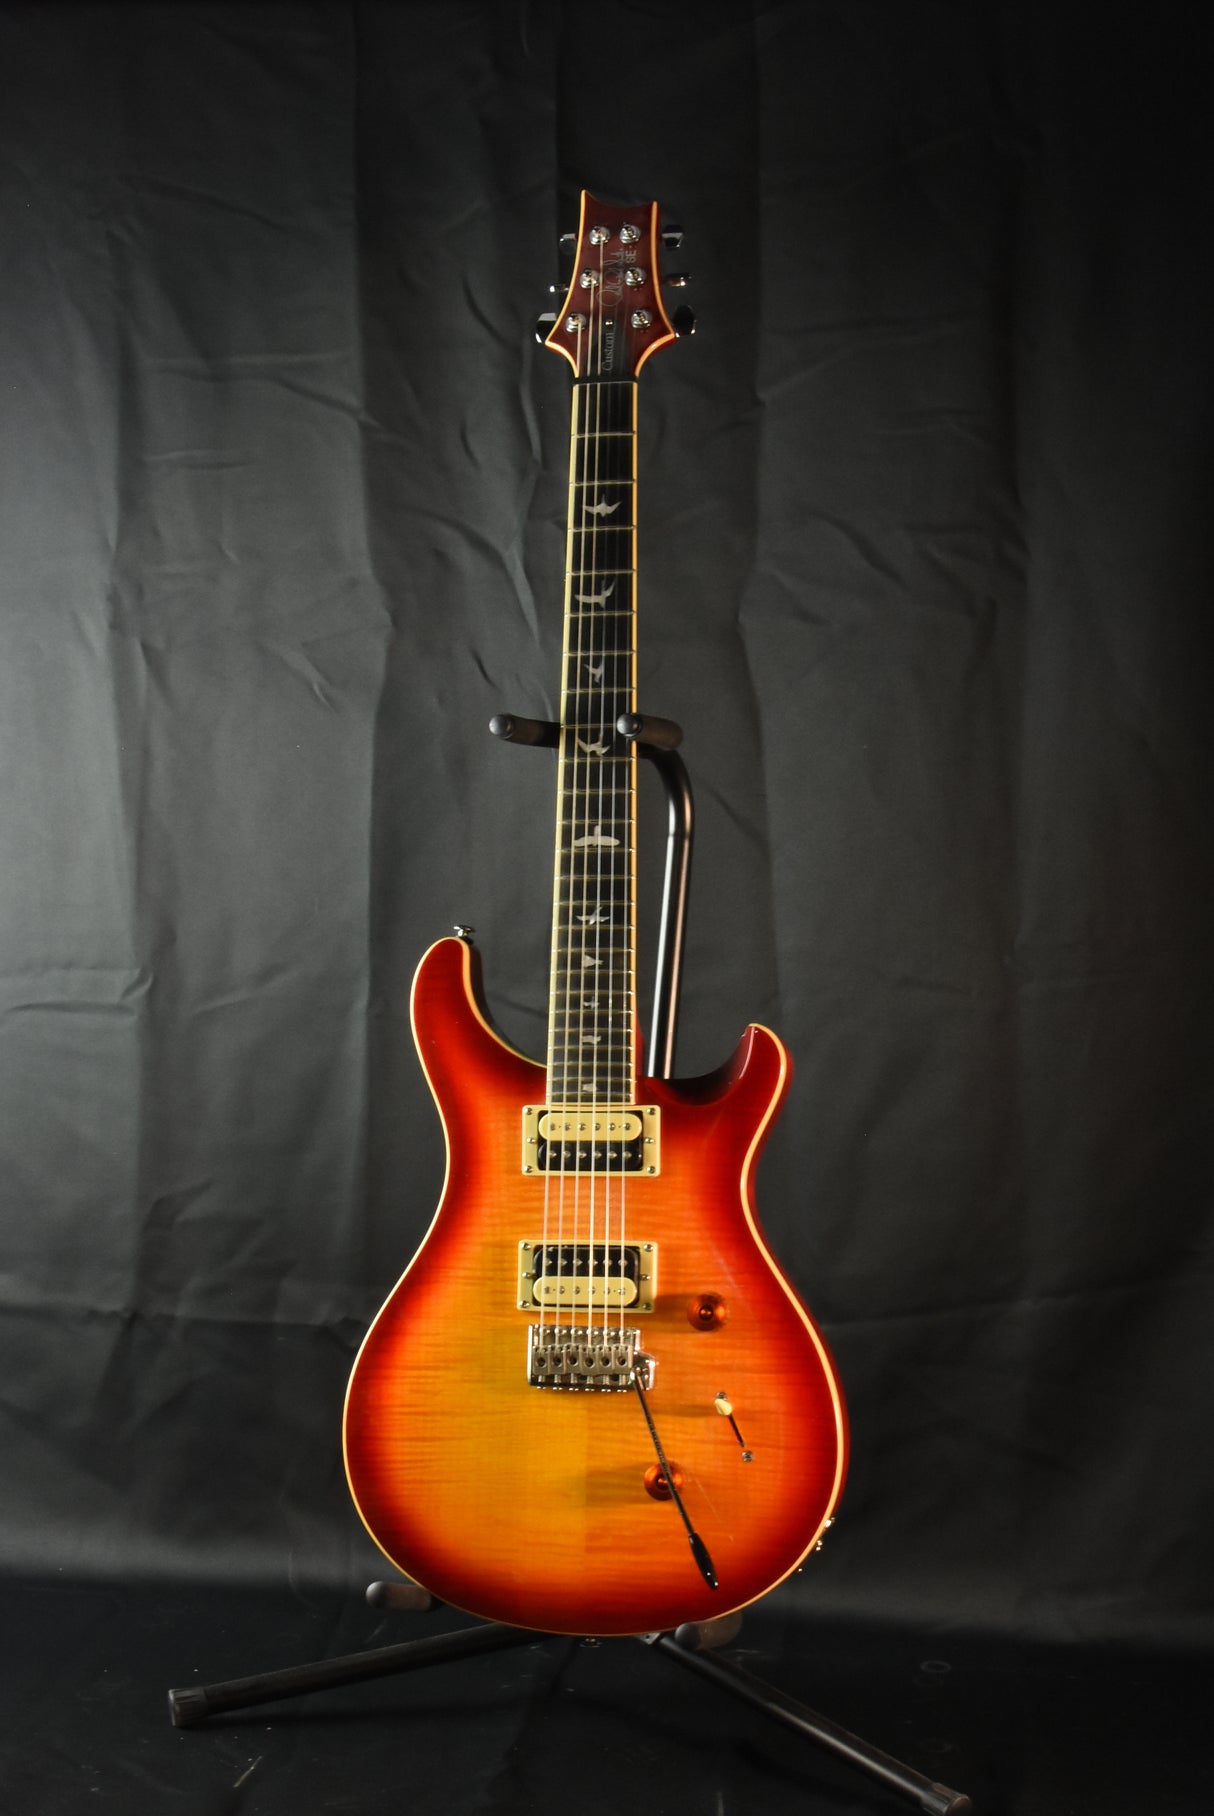 Used PRS SE Custom 24 Electric Guitar - Cherry Burst